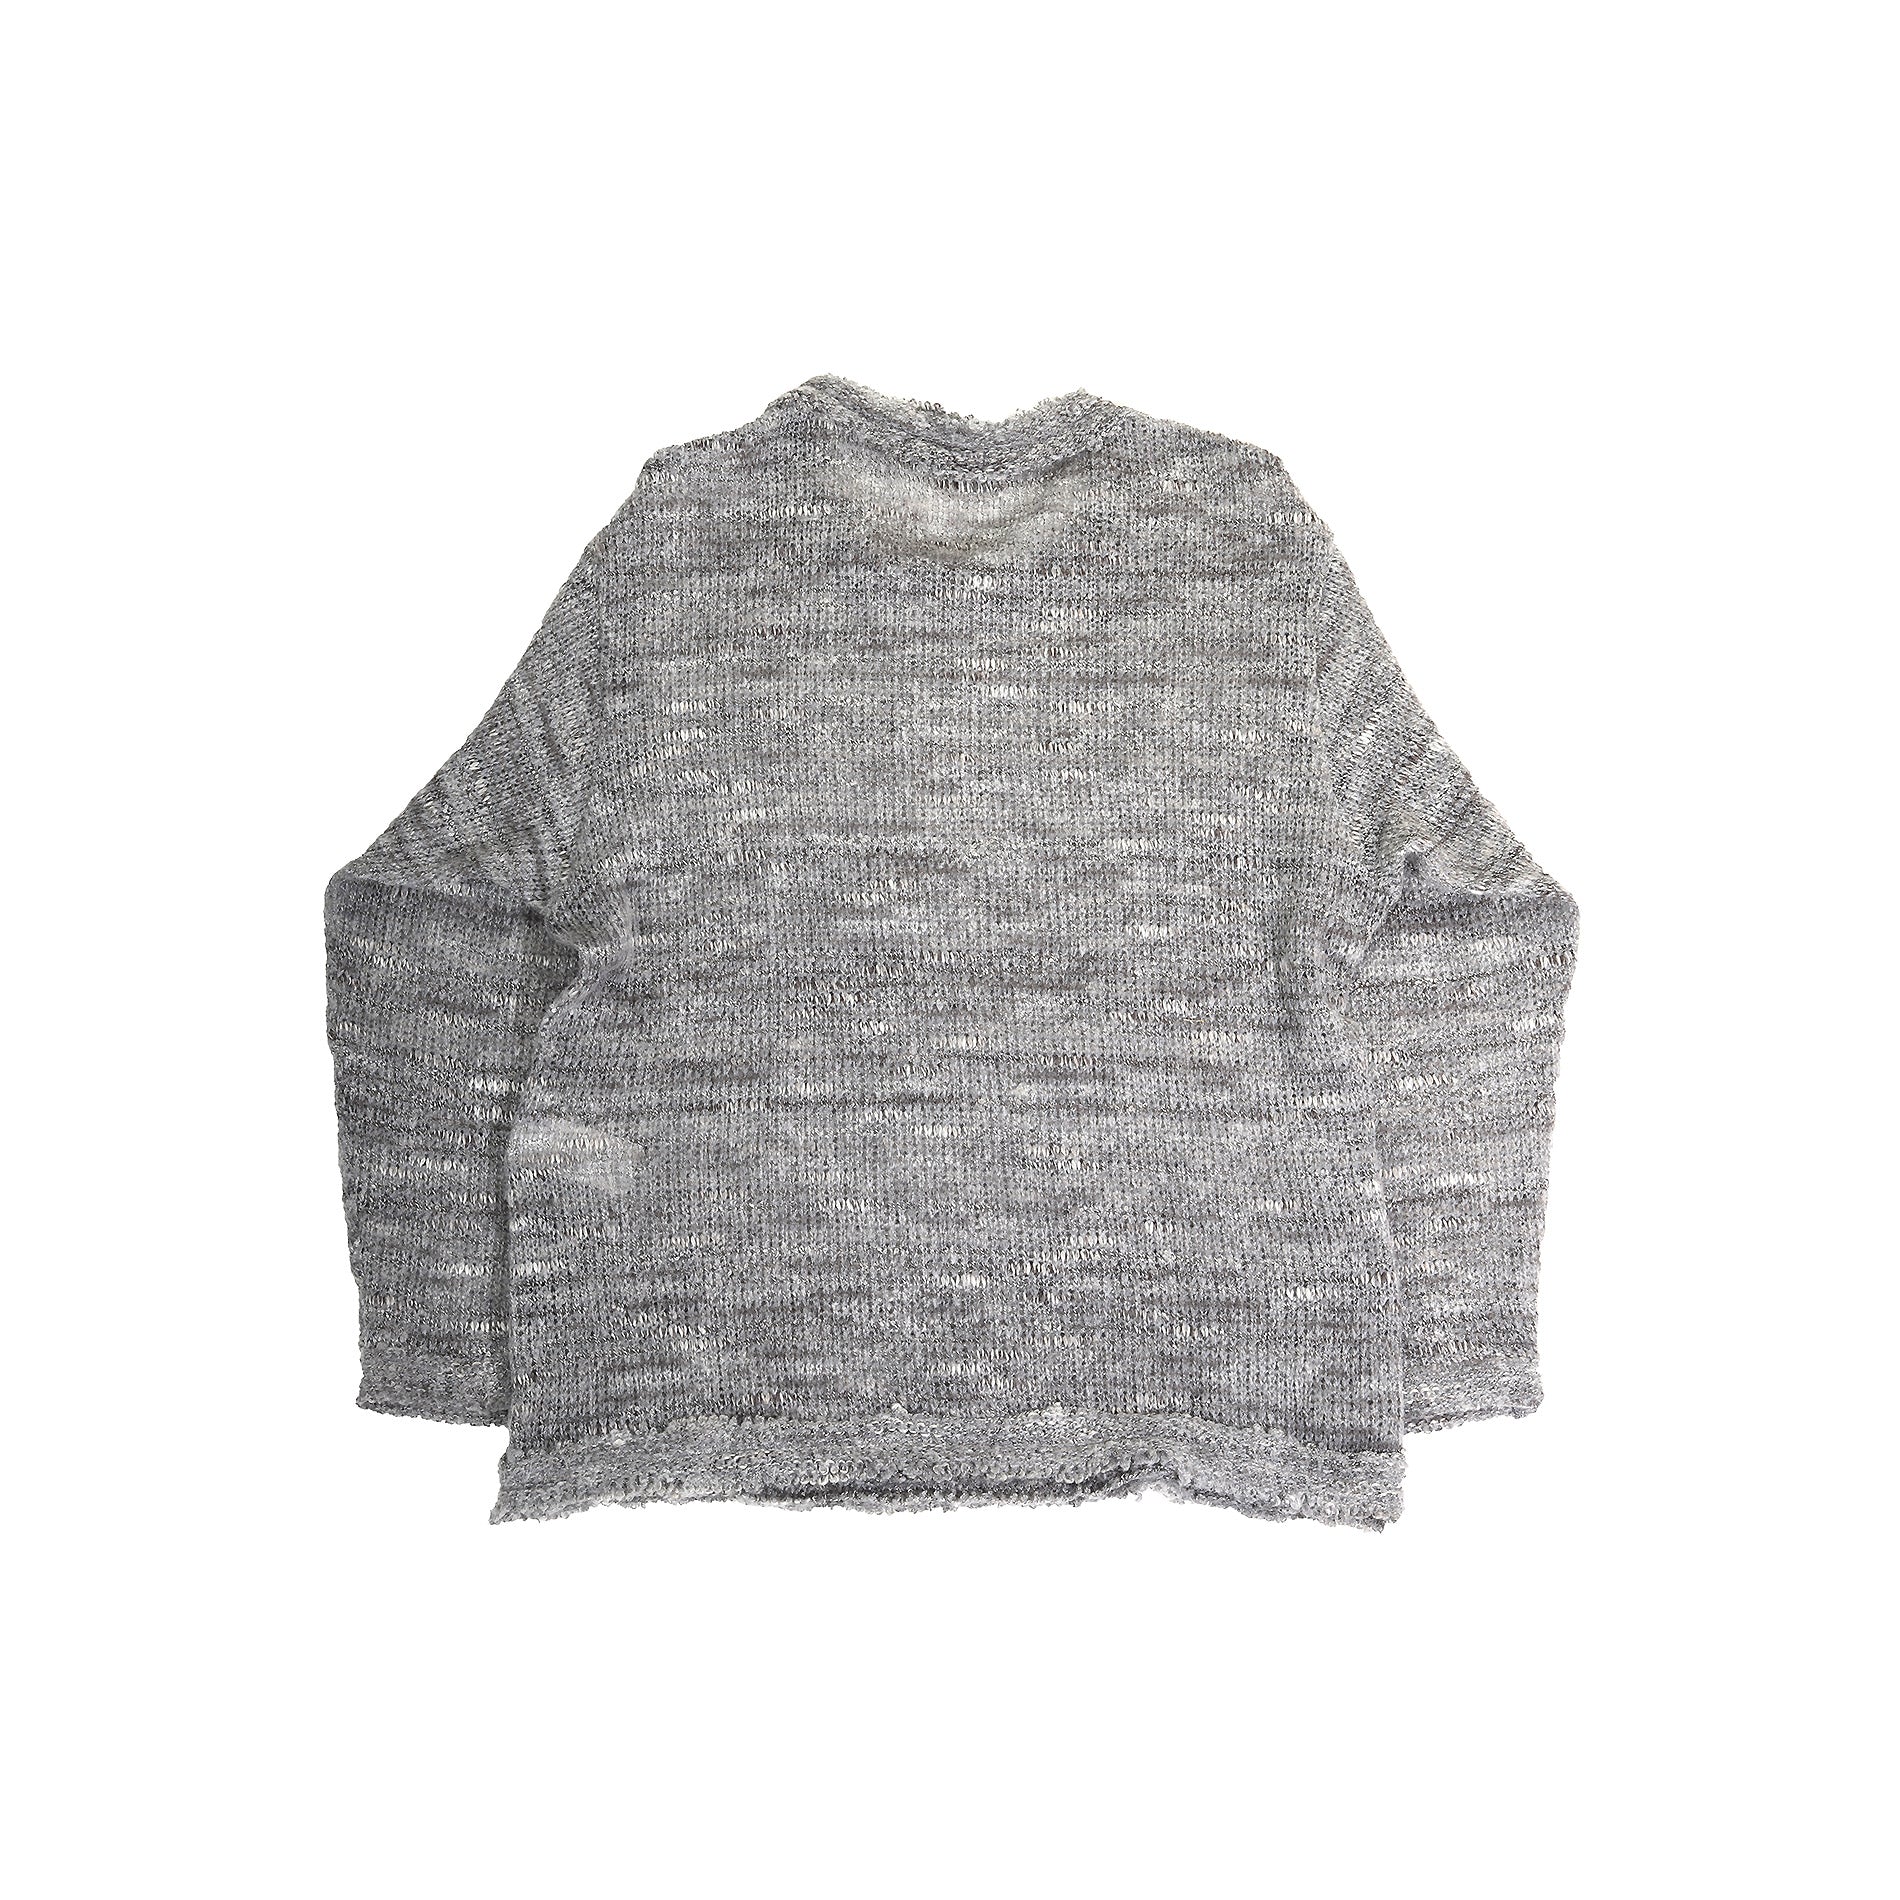 Yohji Yamamoto Pour Homme AW13 Raw Hem Wool Knit Sweater - Ākaibu 